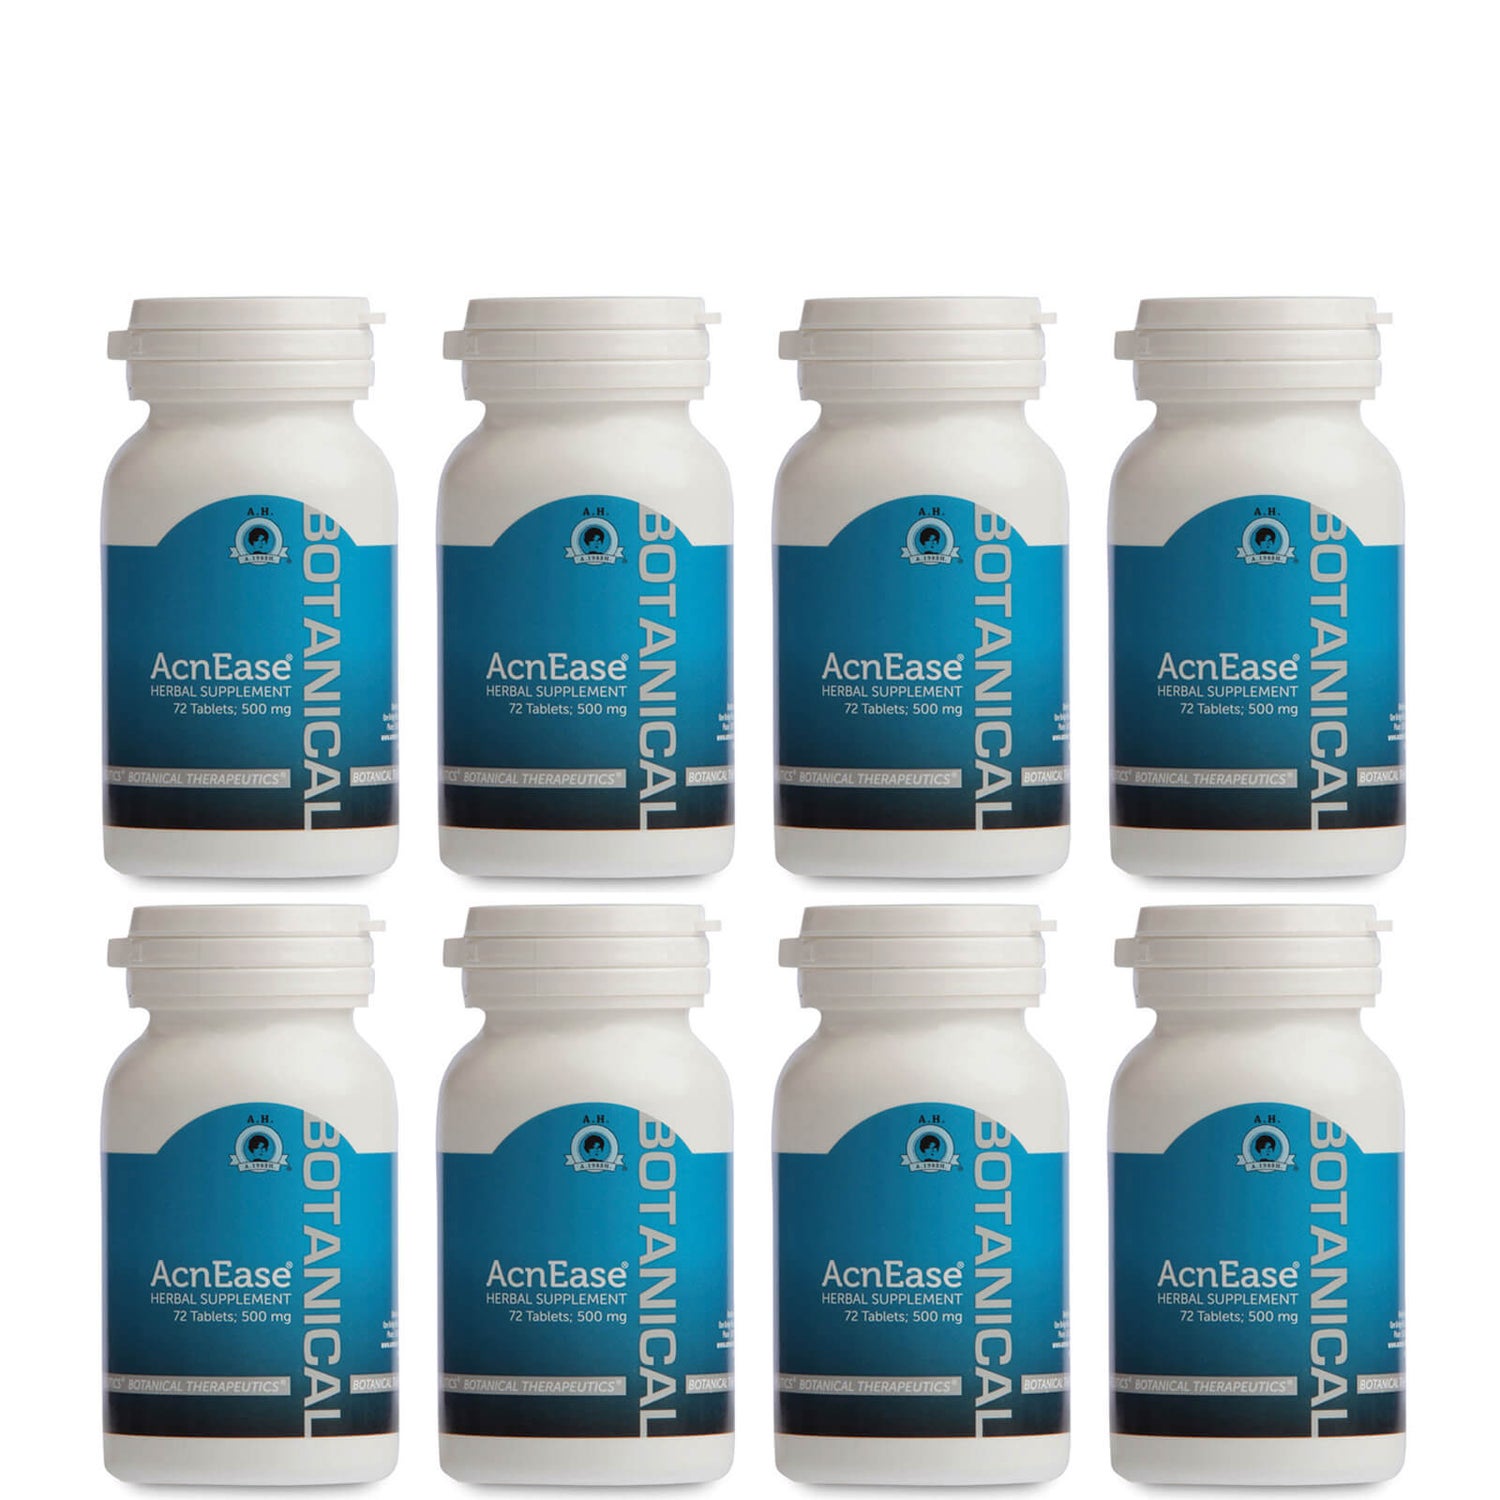 AcnEase Body Acne Treatment – 8 flaskor (paket)